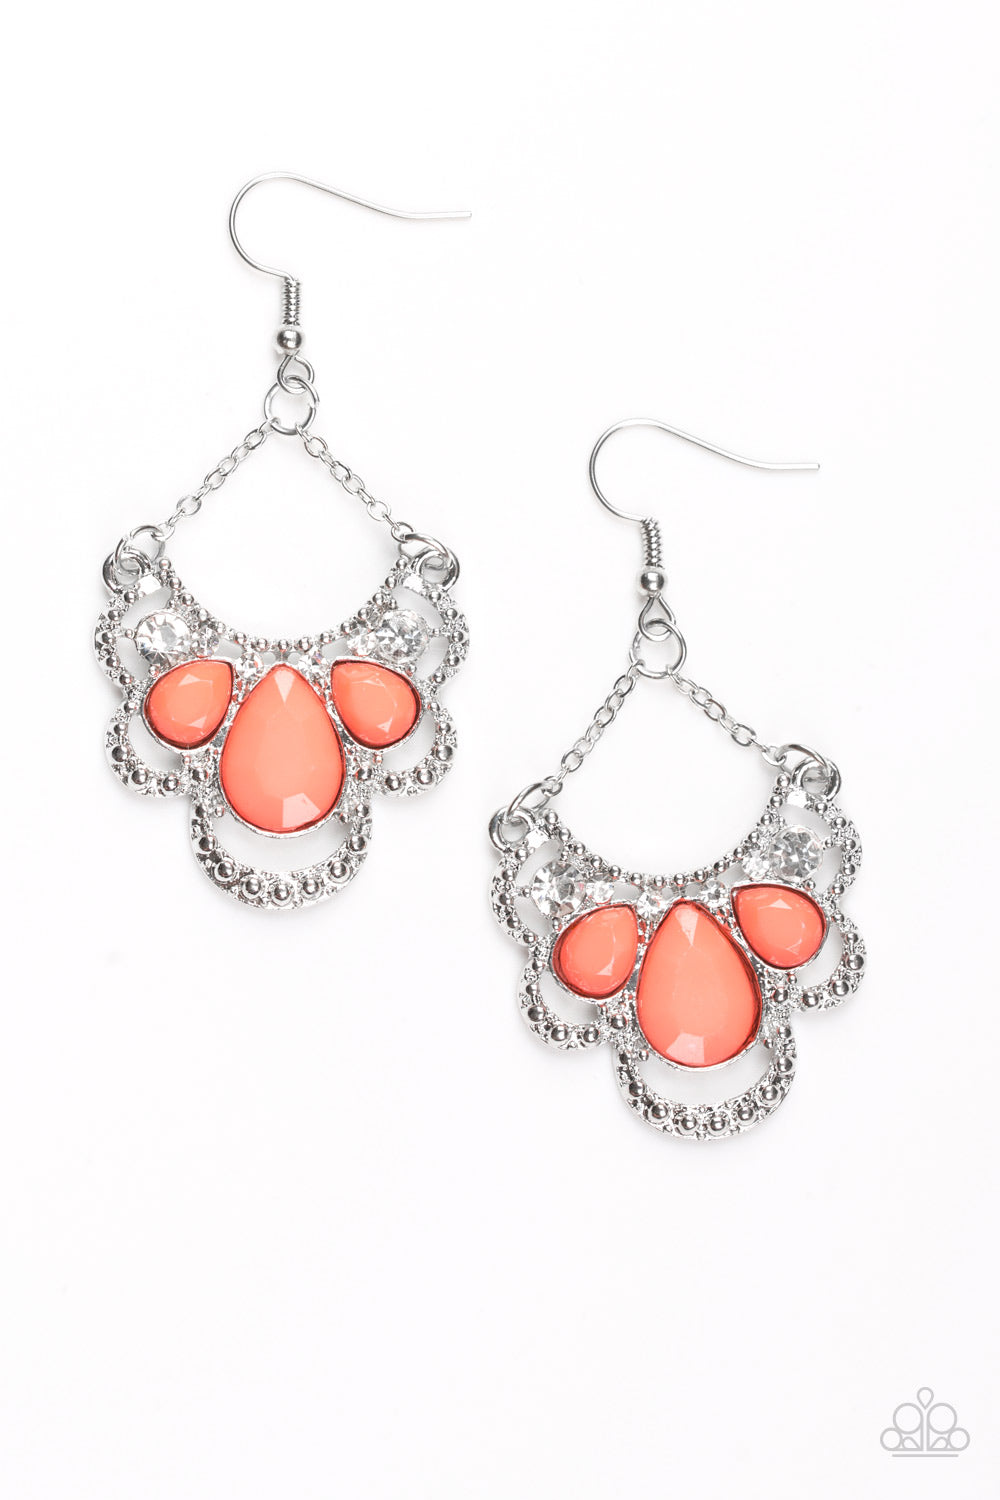 Caribbean Royalty Orange Paparazzi Earrings Cashmere Pink Jewels - Cashmere Pink Jewels & Accessories, Cashmere Pink Jewels & Accessories - Paparazzi